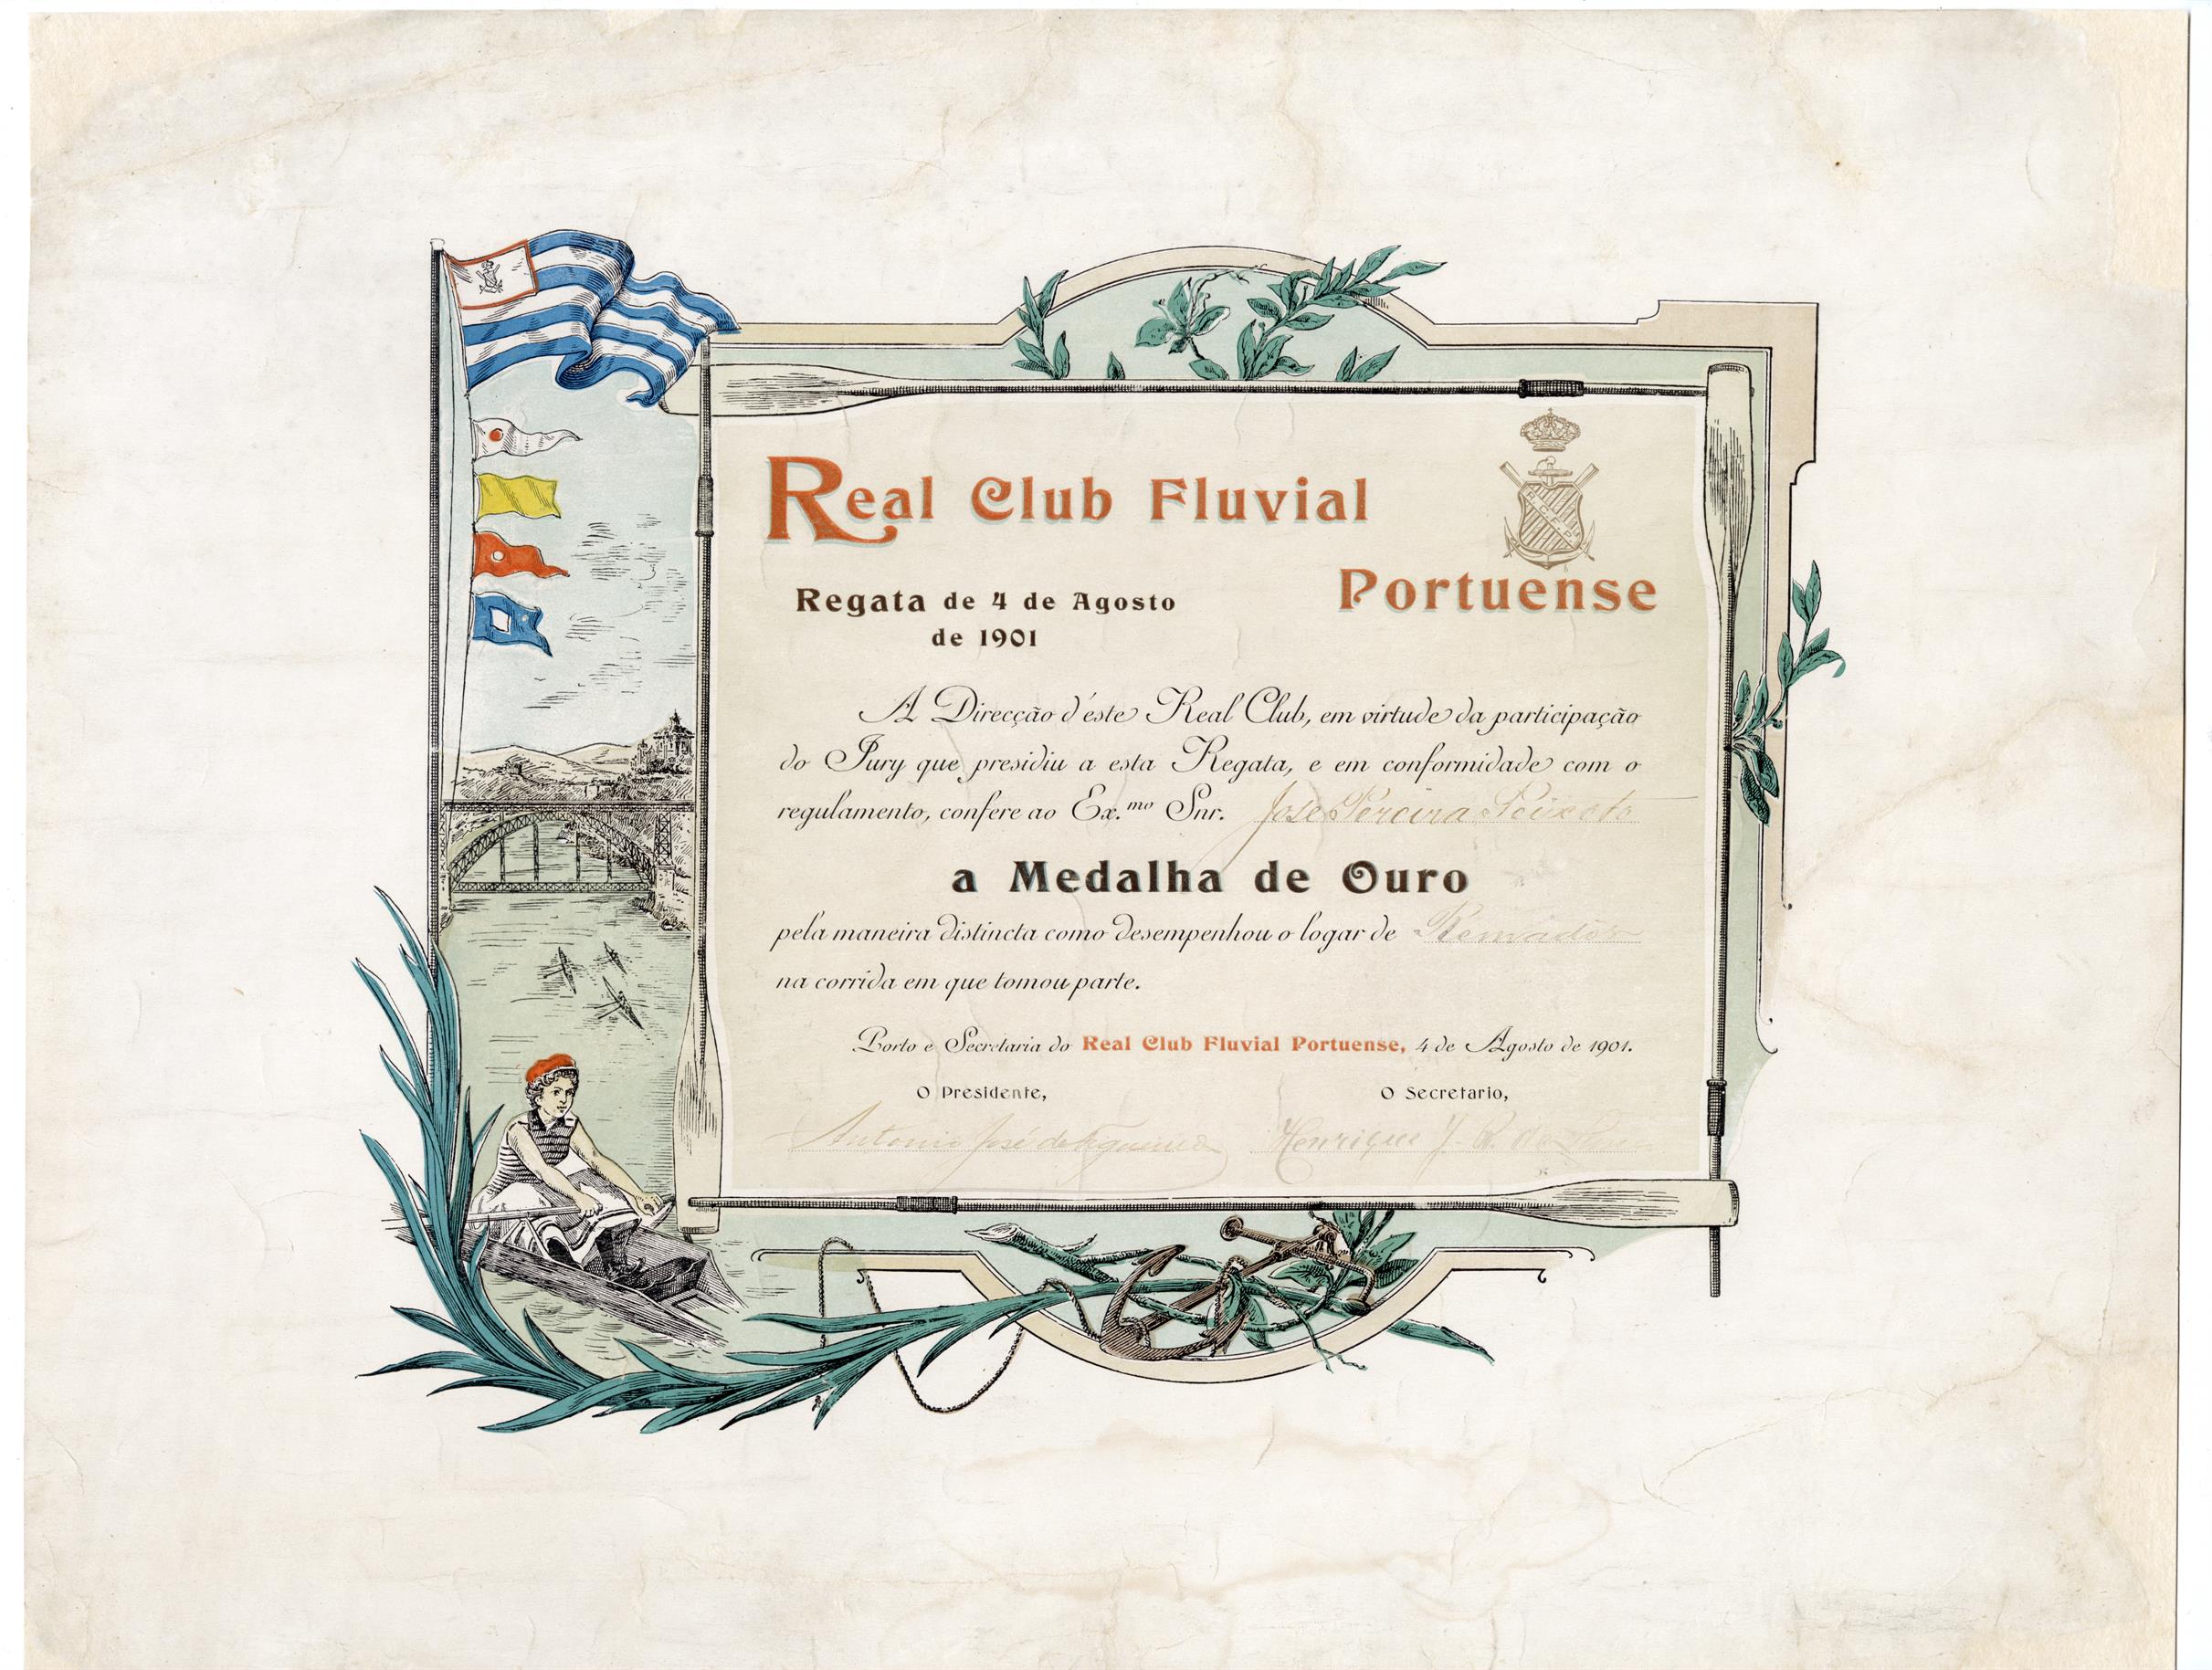 Real Clube Fluvial Portuense : regata de 4 de agosto de 1901